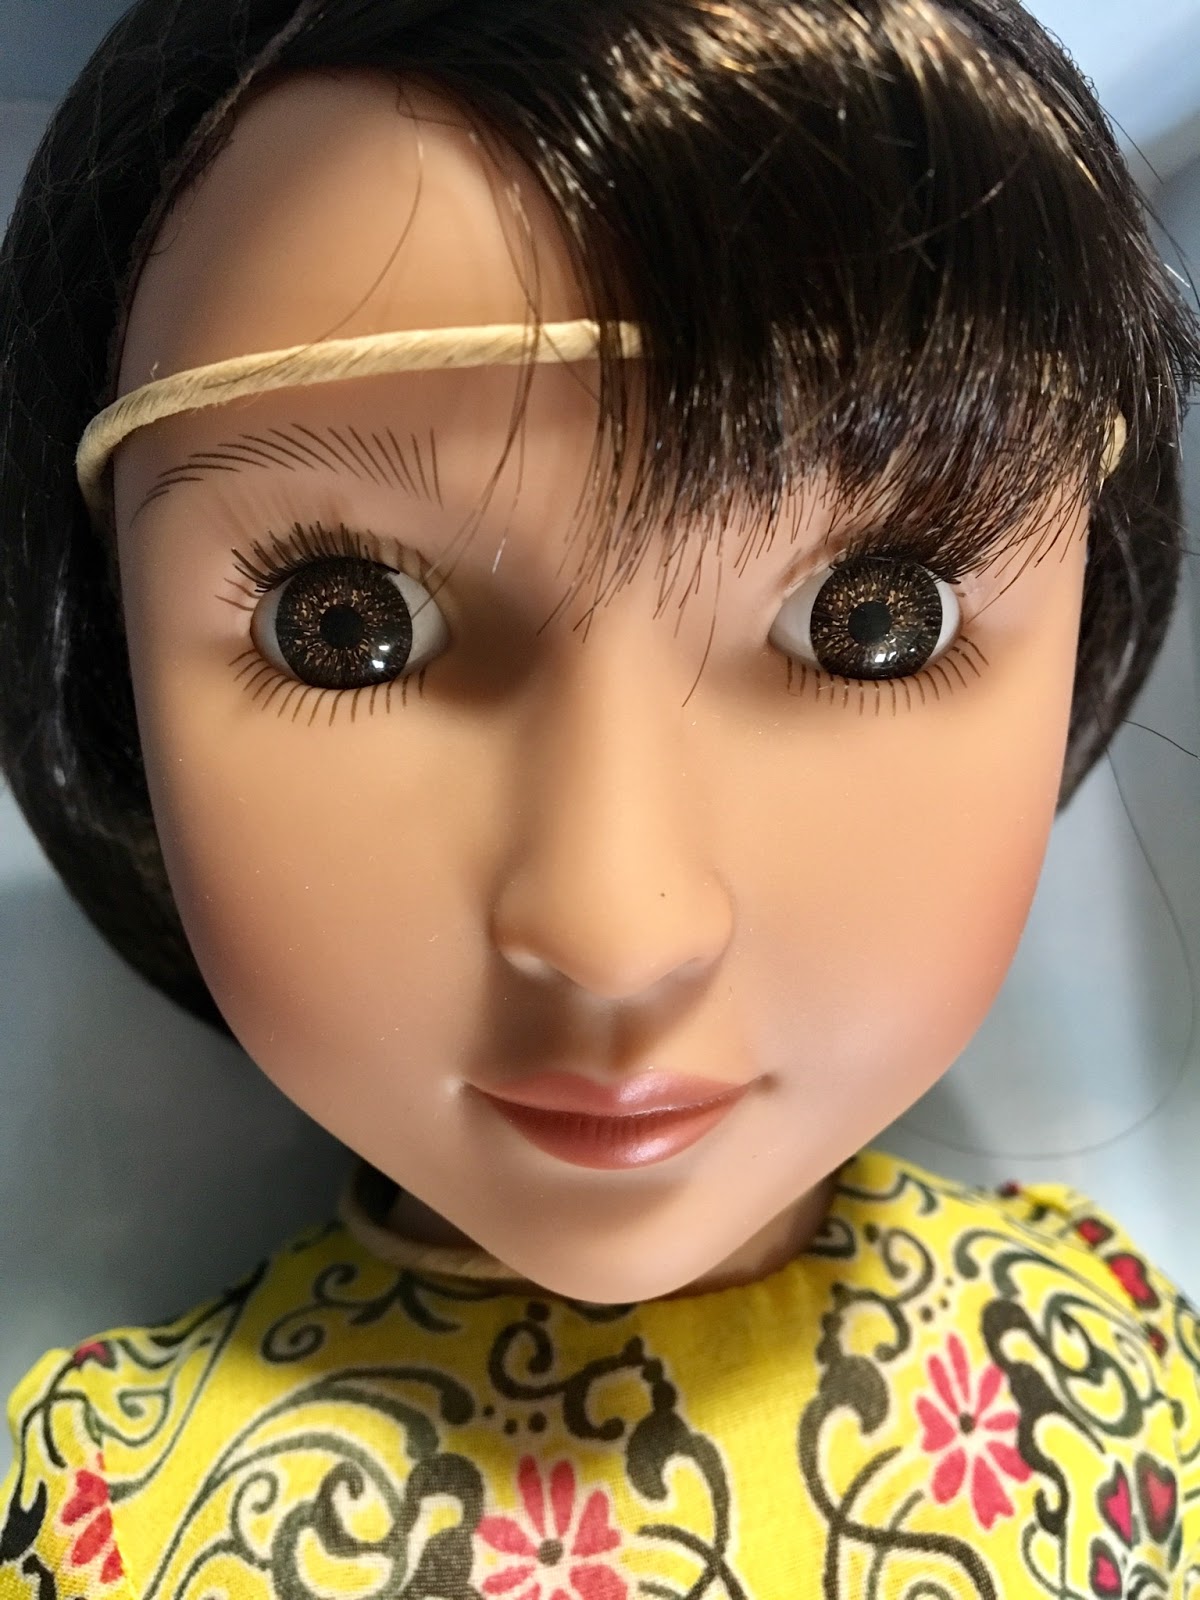 PennilessCaucasianRubbish American Doll Adventures: A Girl For All Time ...